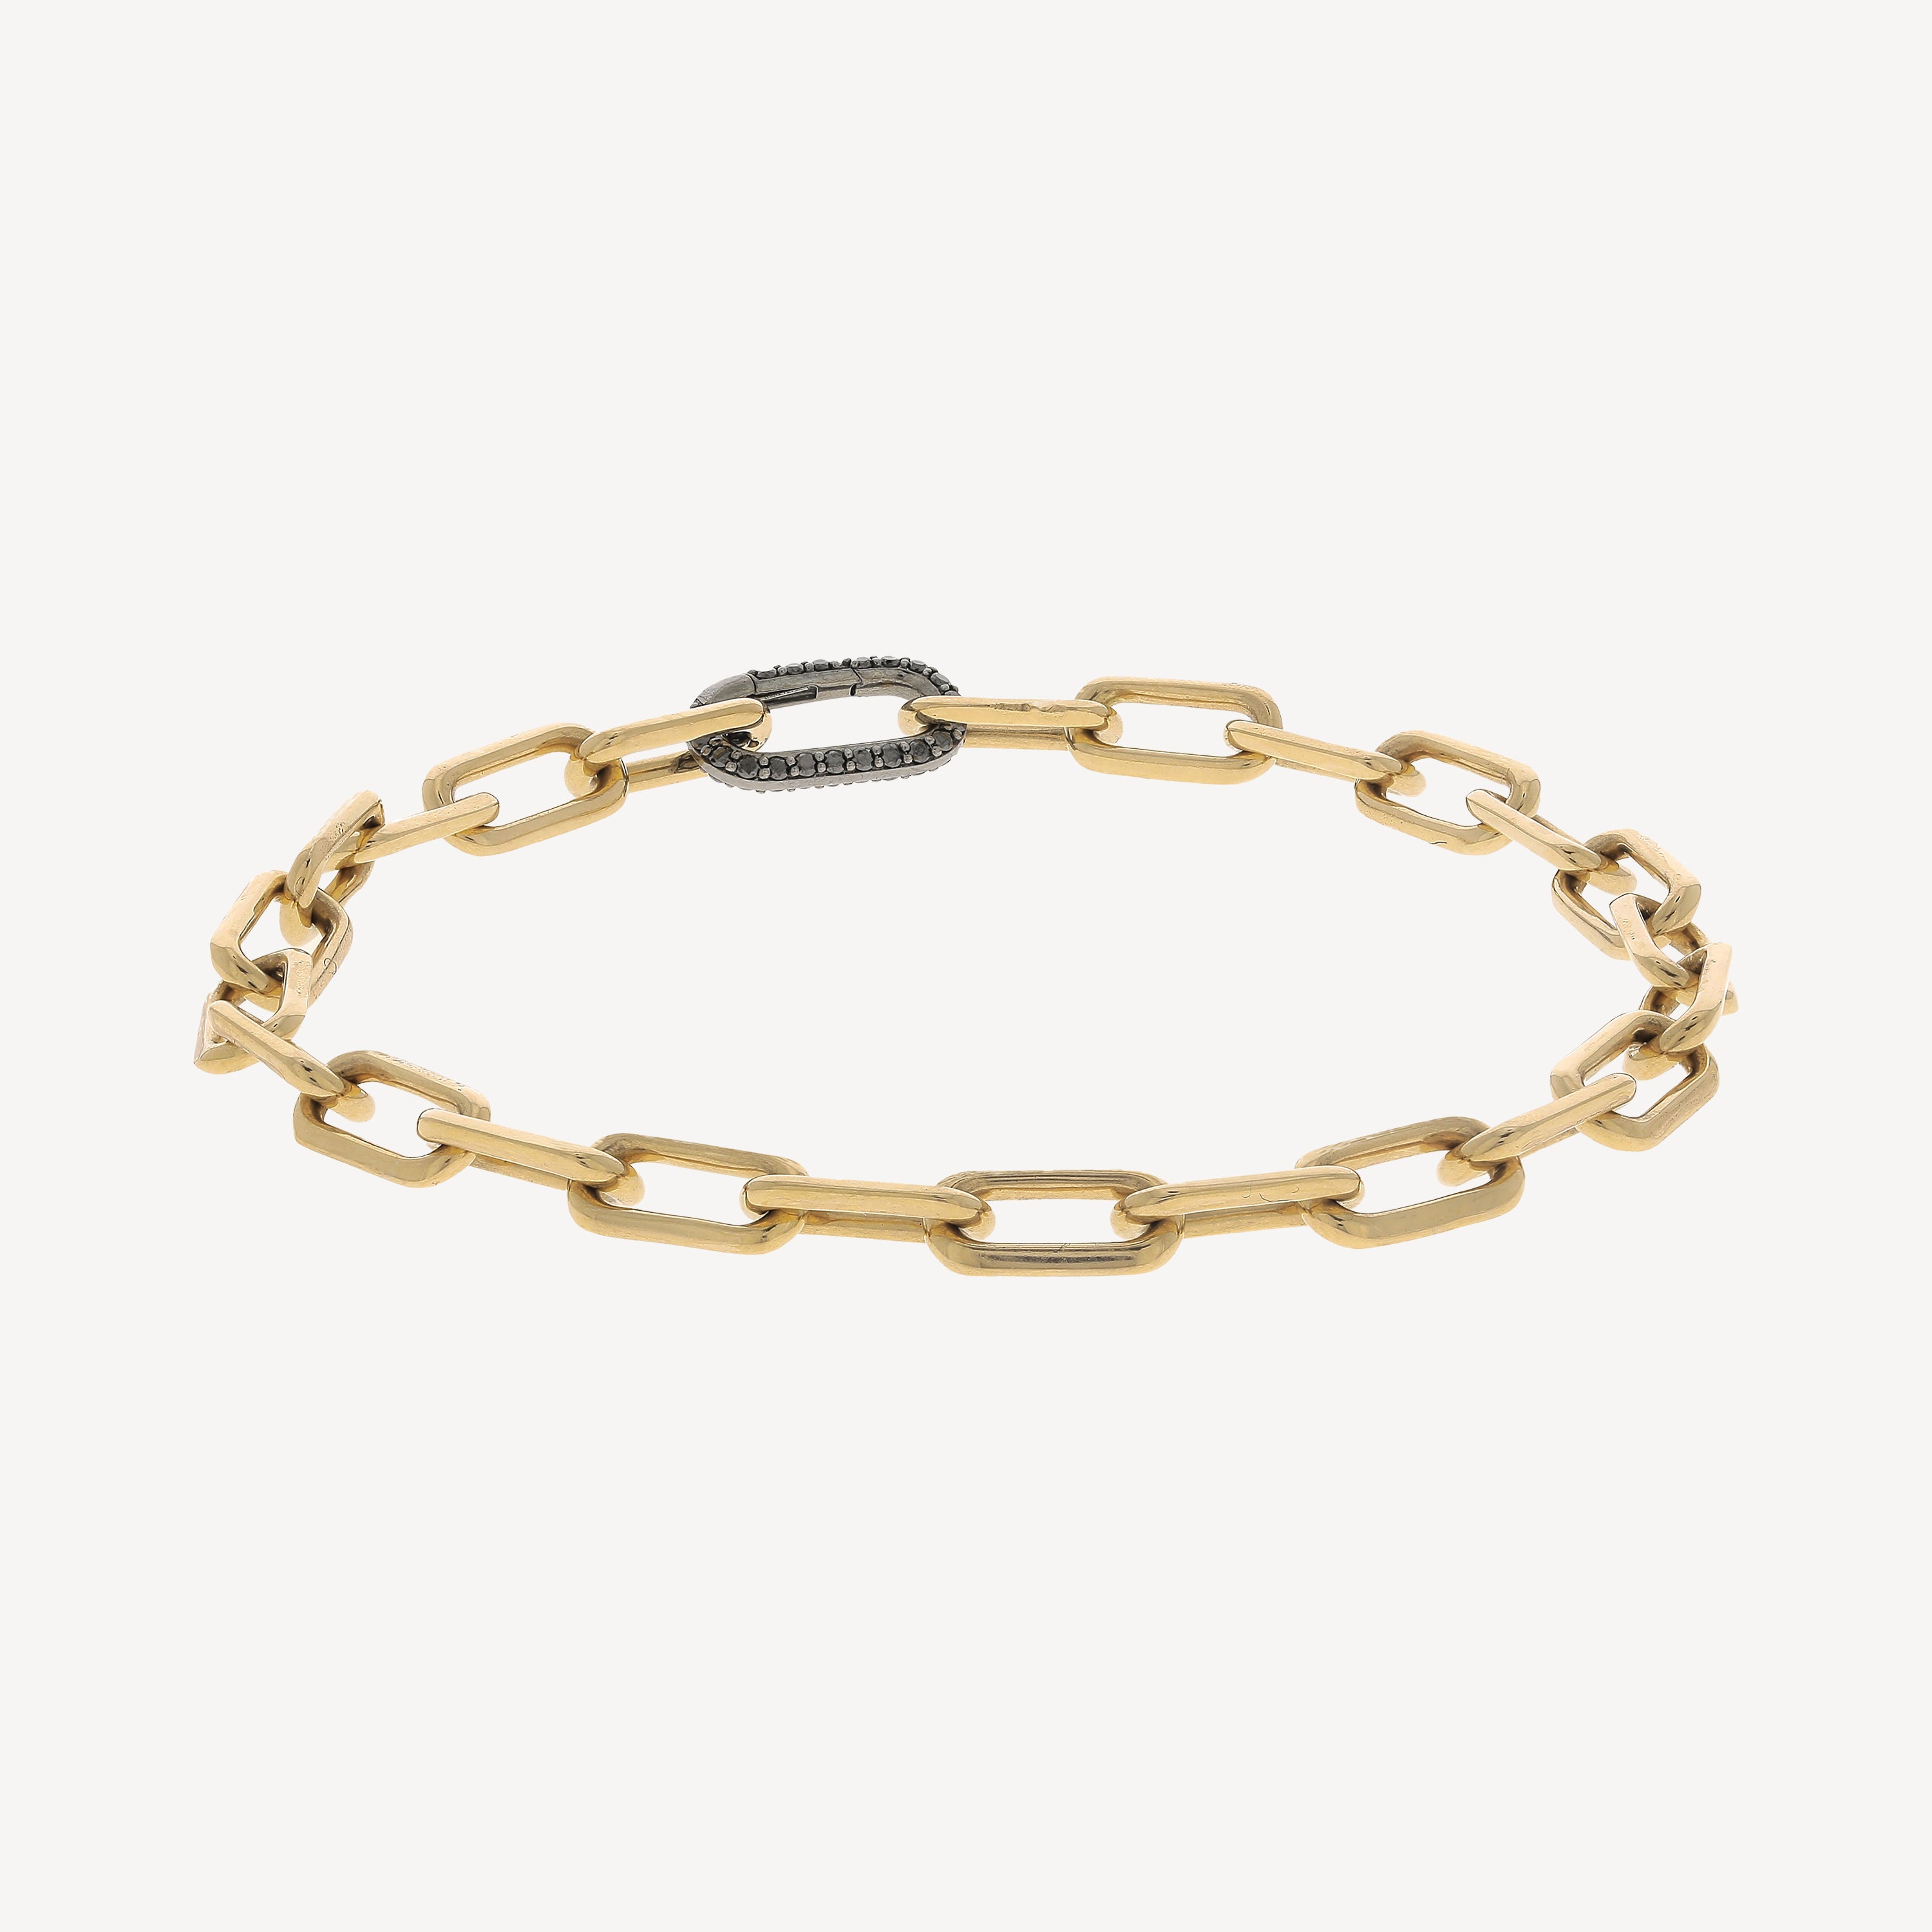 Bracelet Saxon Gold and Black Diamond Link